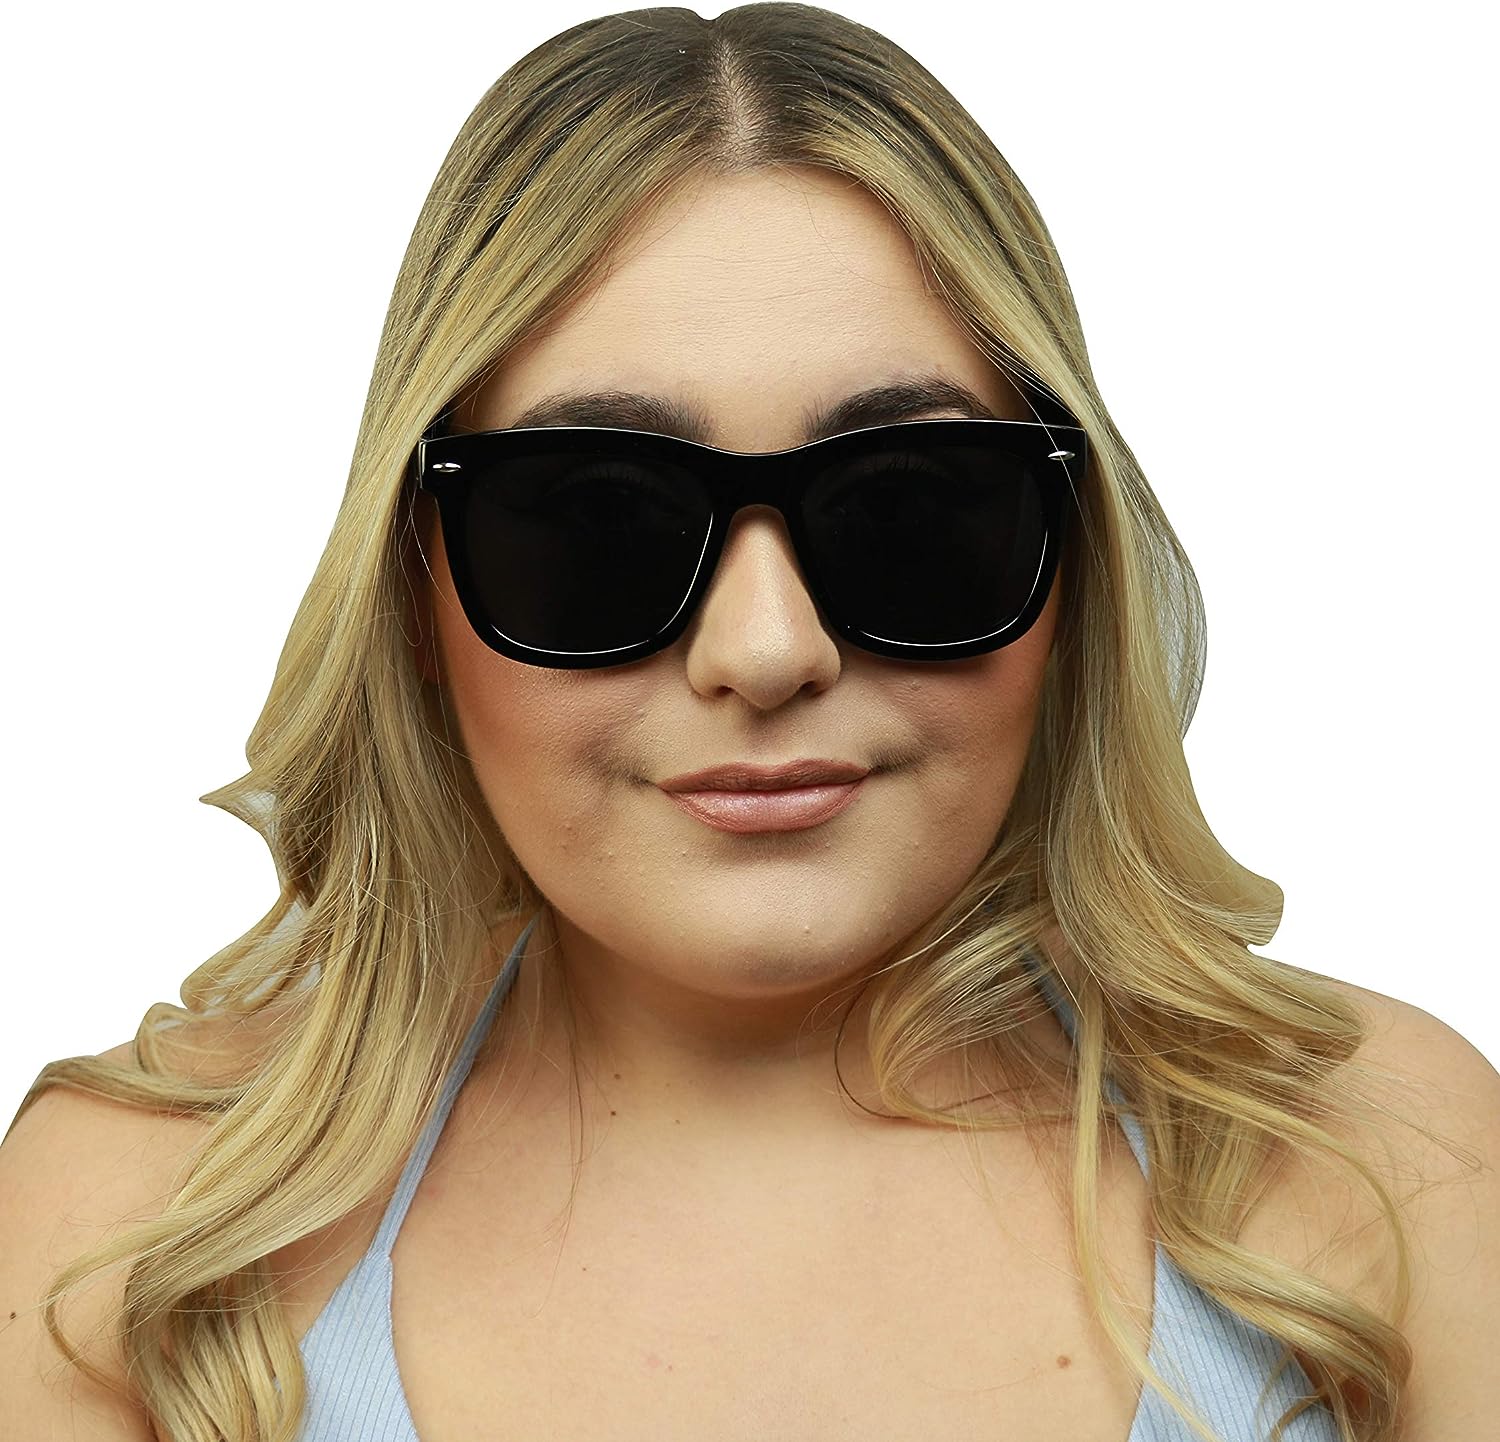 ShadyVEU Super Dark Black Sunglasses UV Protection Lens Spring Hinge 80s Vintage Retro Inspired Shades